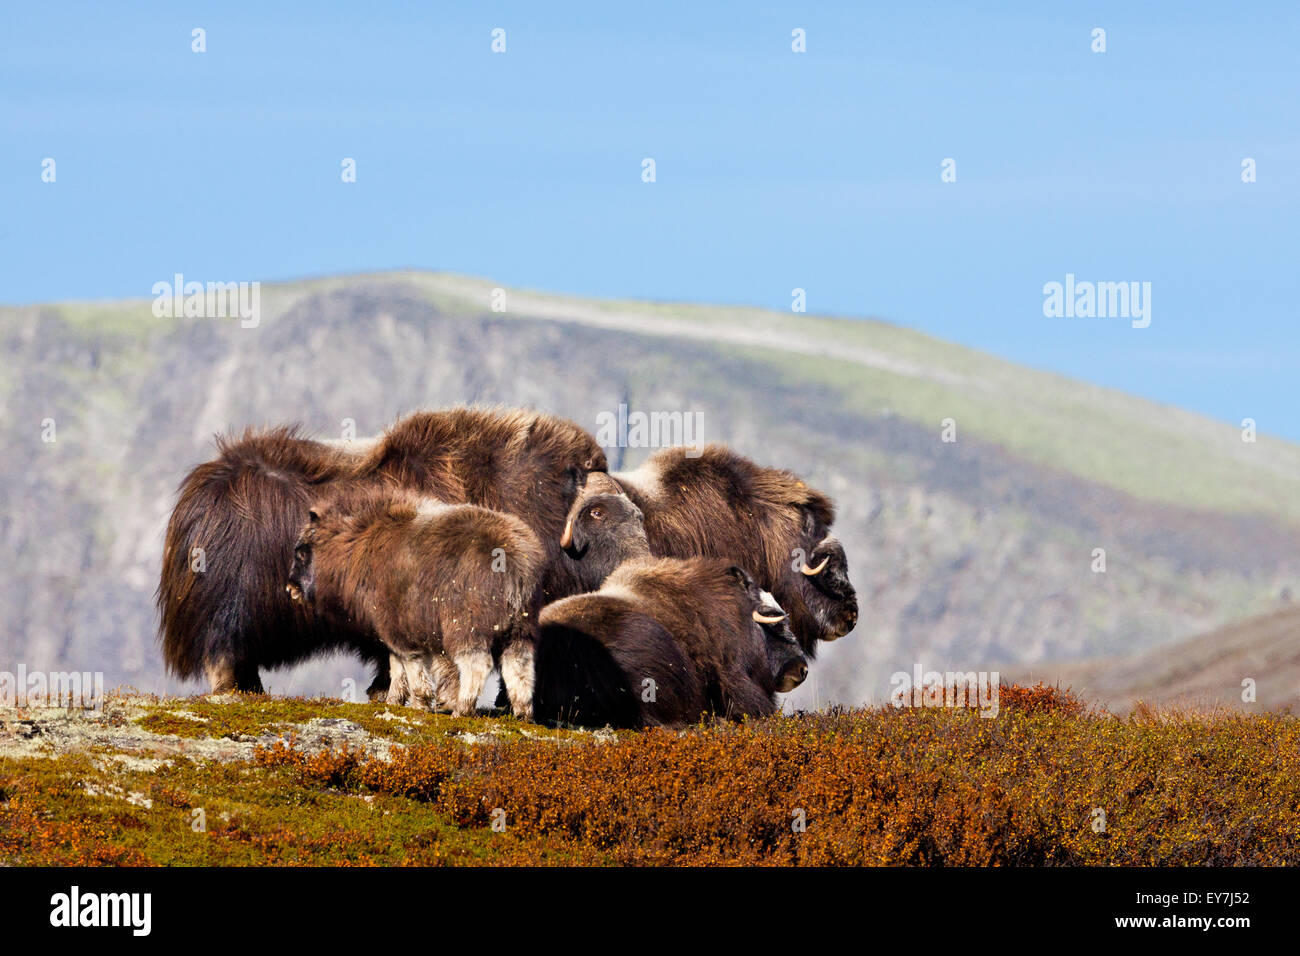 Muskoxen family in Dovrefjell national park, Norway. Stock Photo